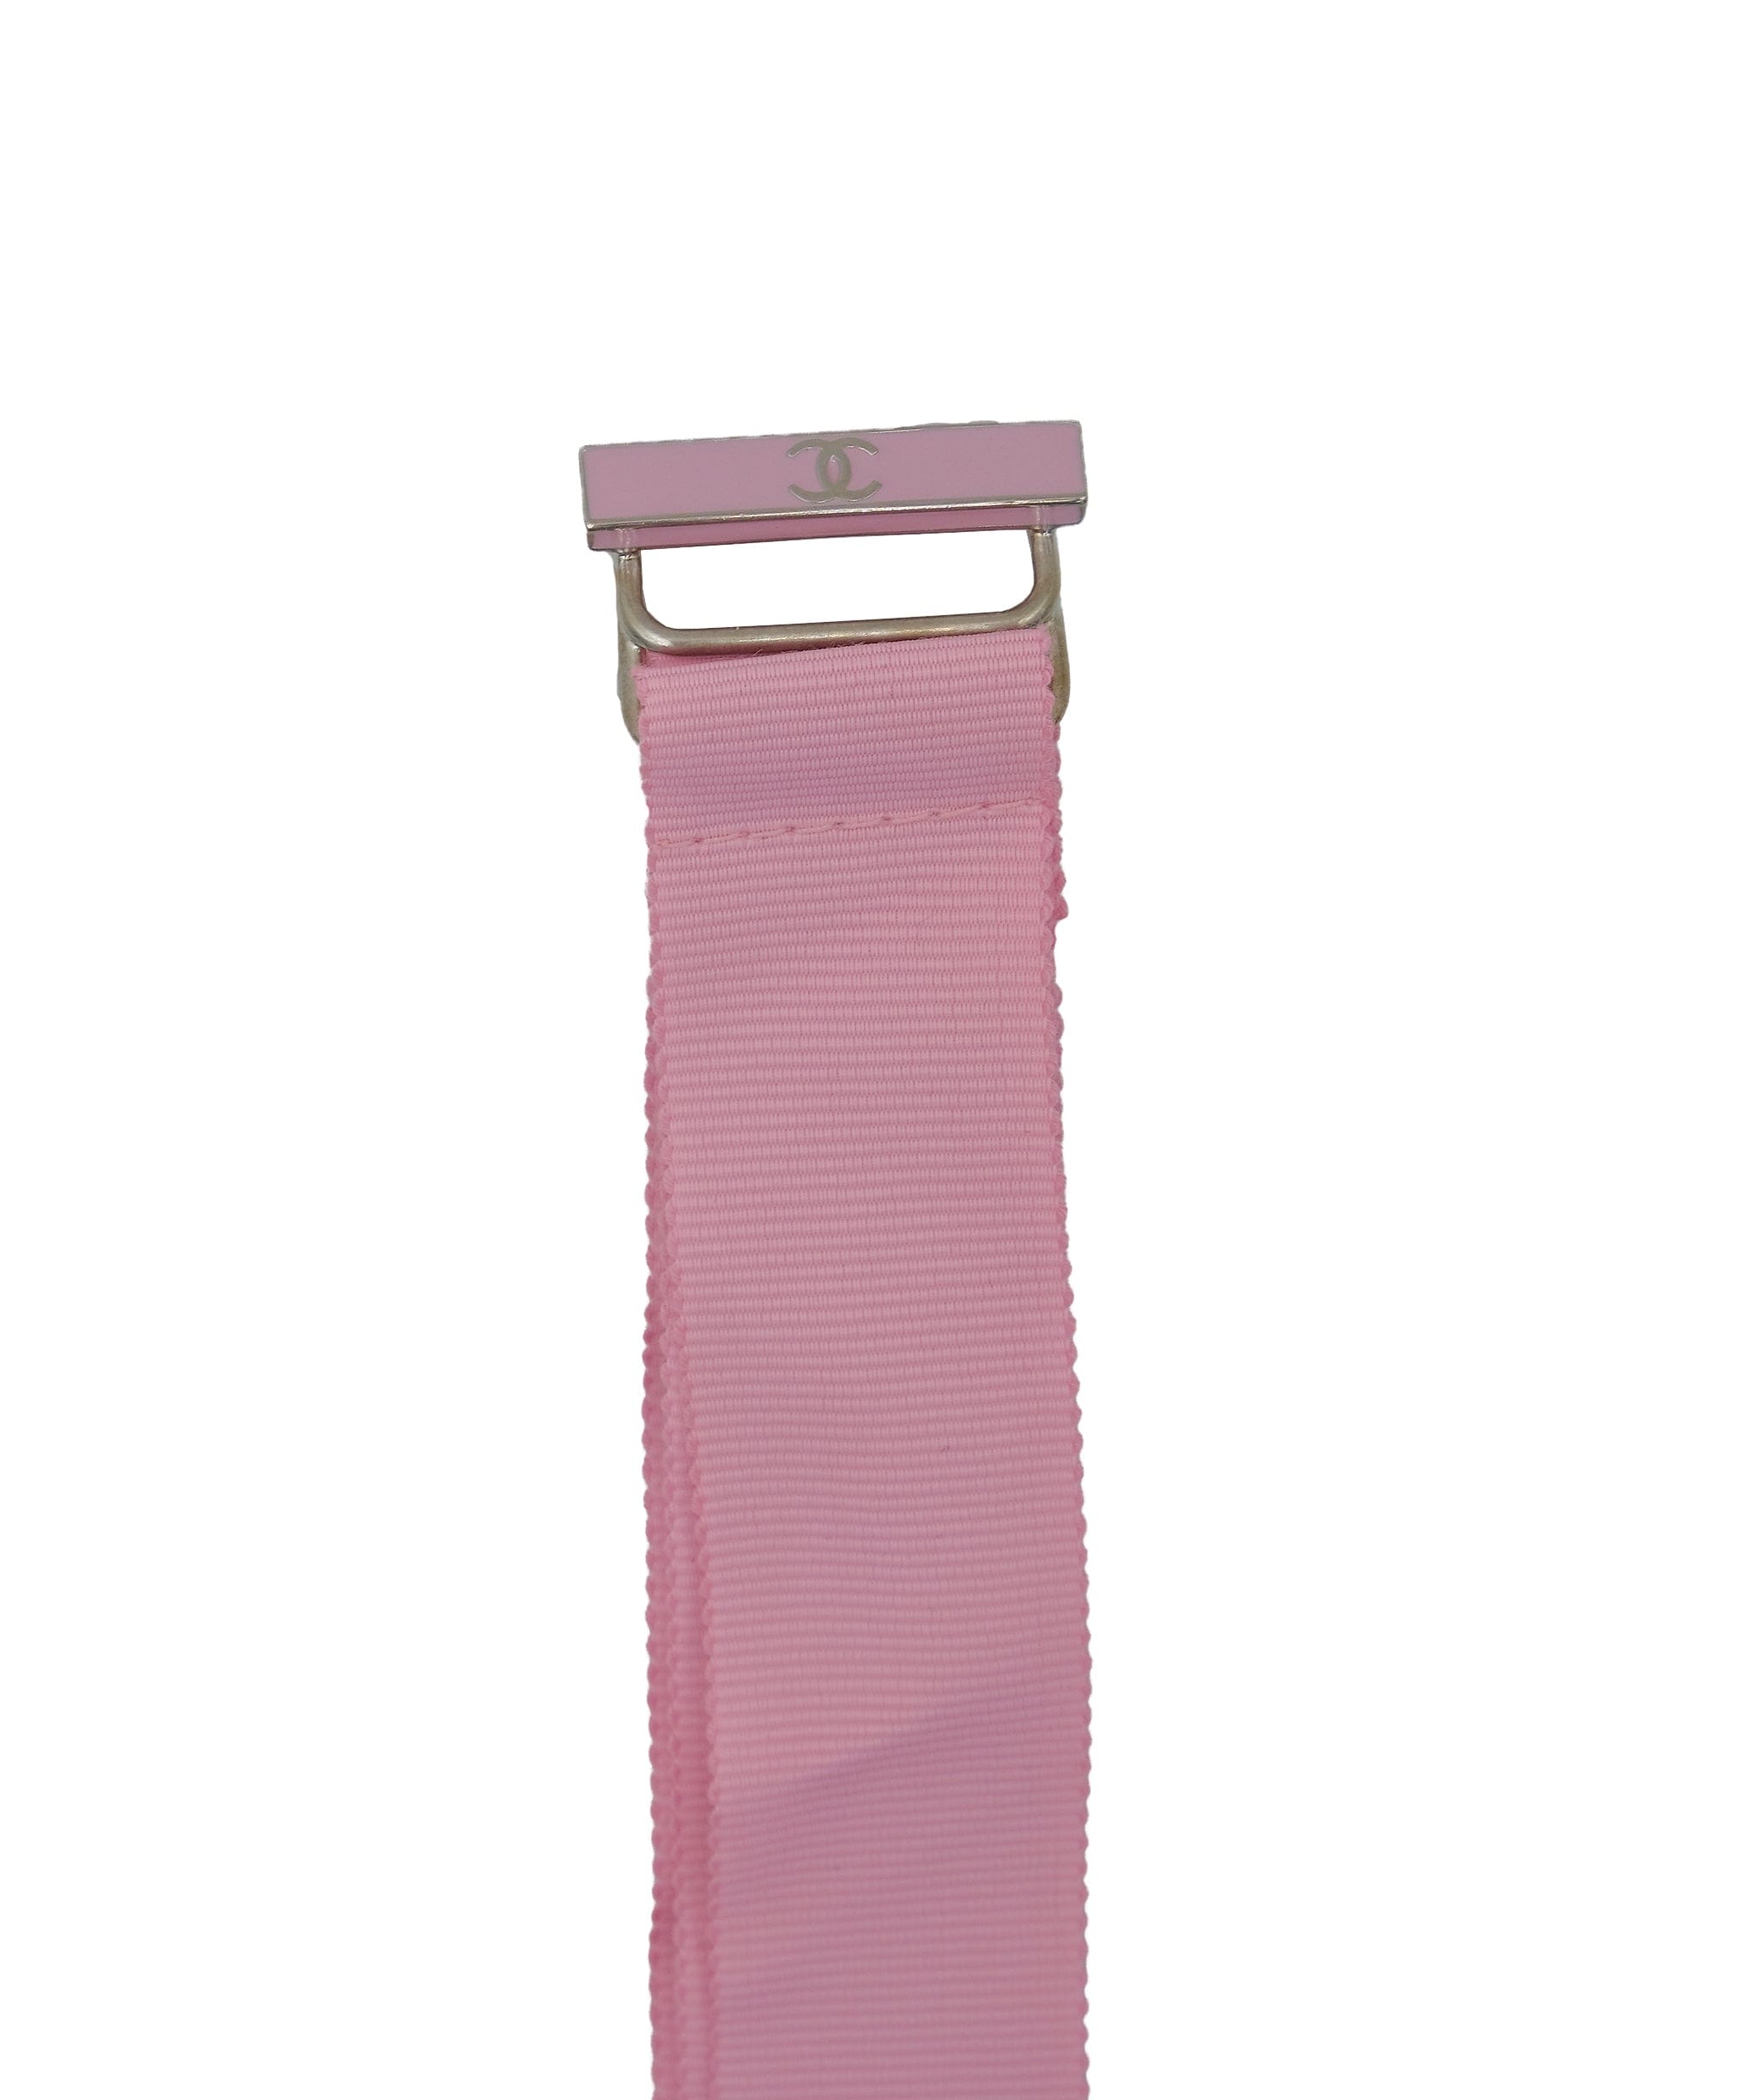 Chanel Chanel Pink belt RJC2623